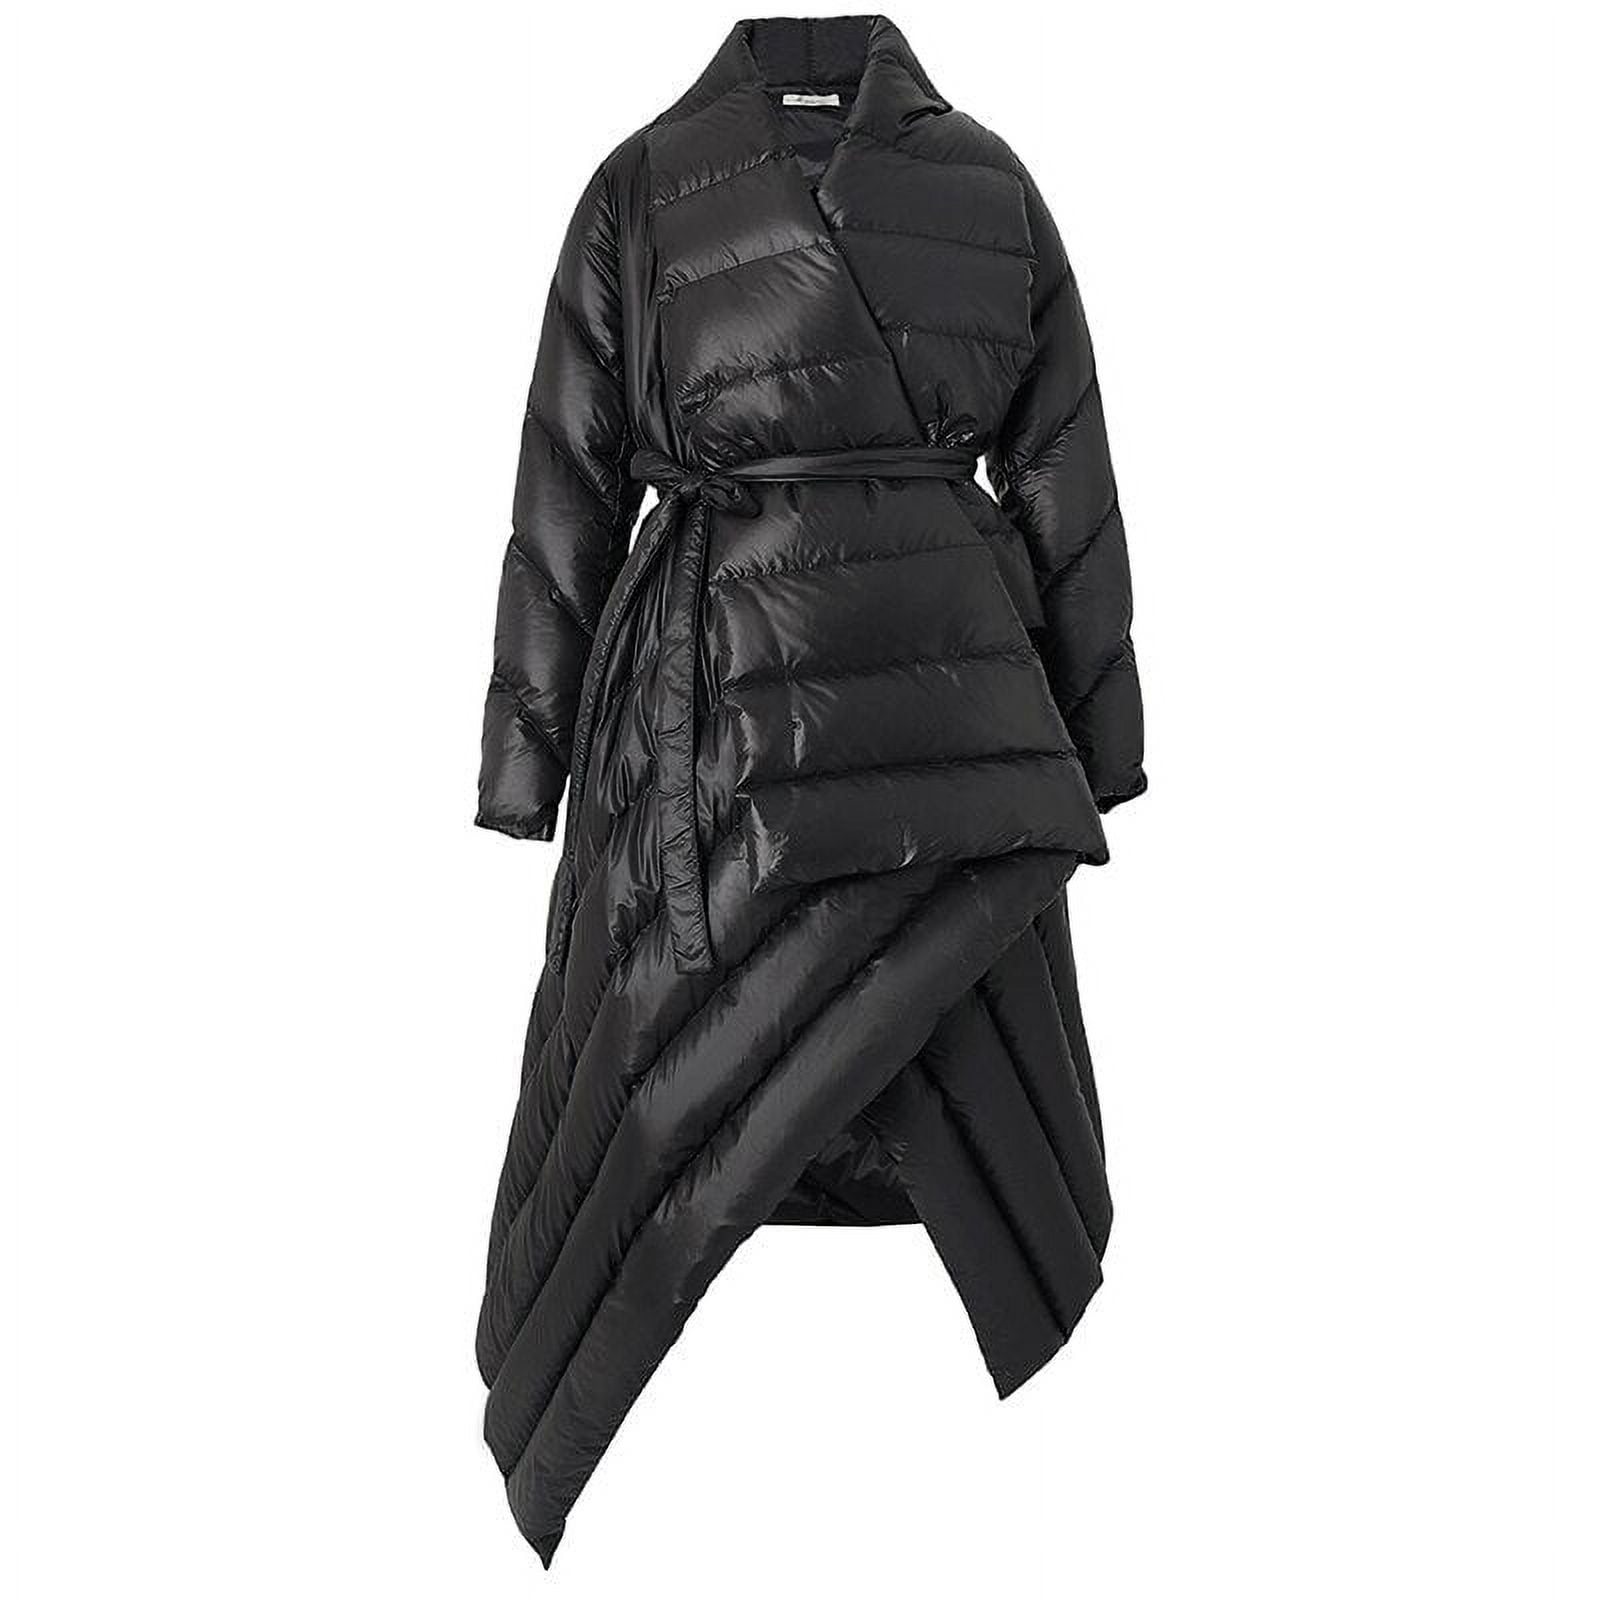 AEL Belt Down Jacket Women Winter Irregular Long Coat Fashion Parka ...